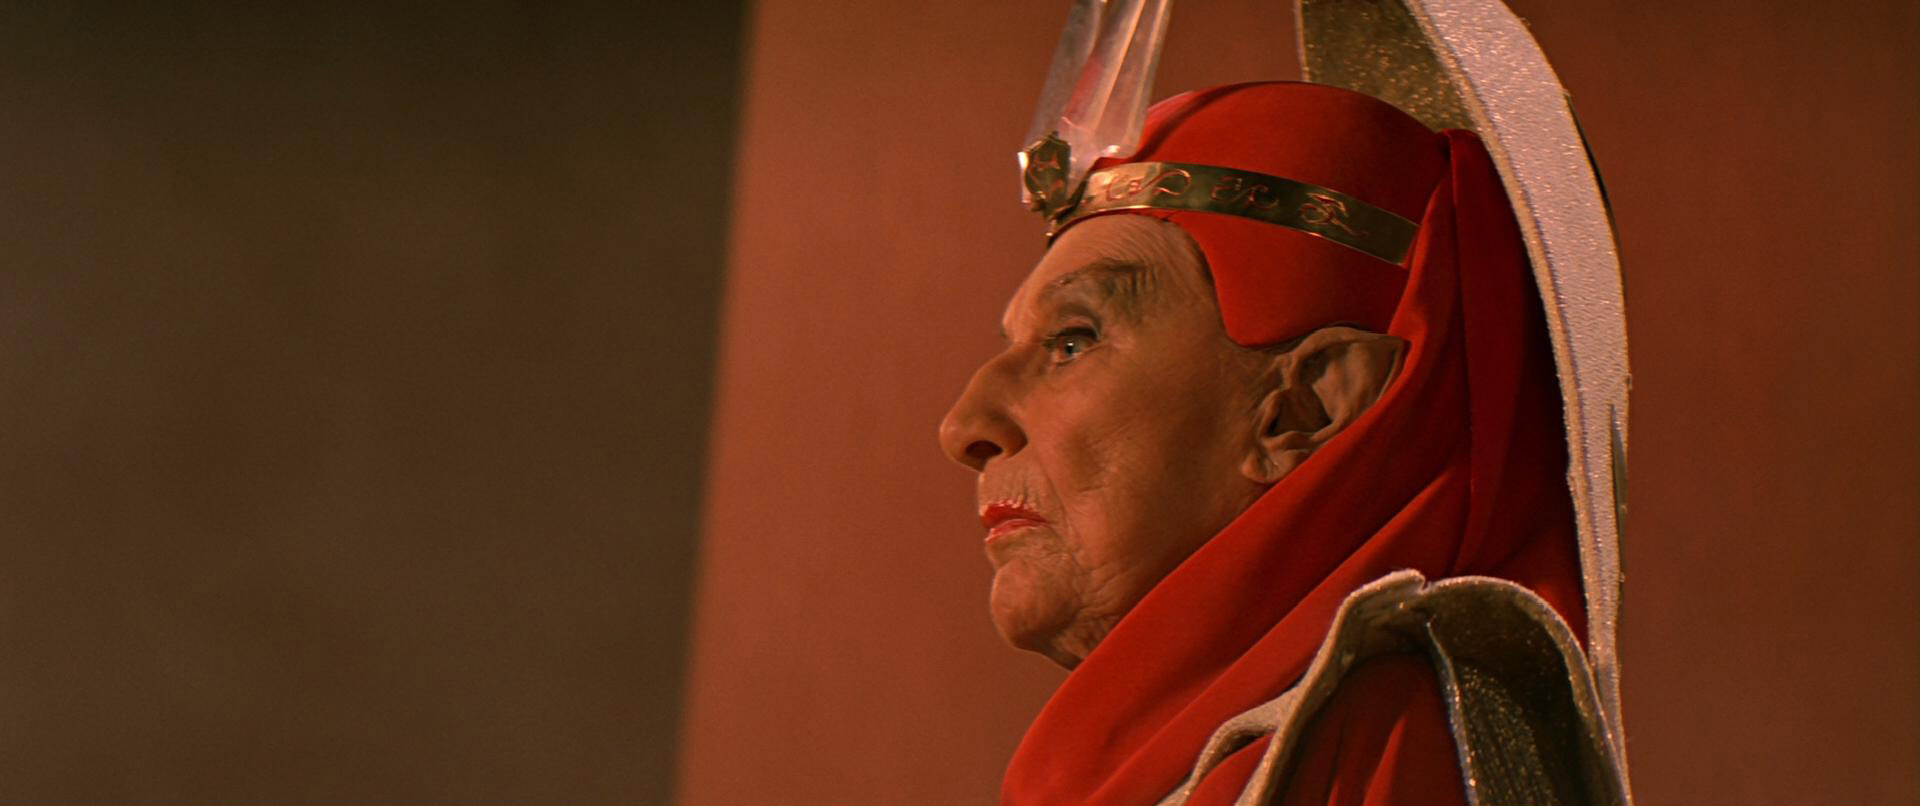 T'Lar, the Vulcan priestess in Star Trek V: The Final Frontier